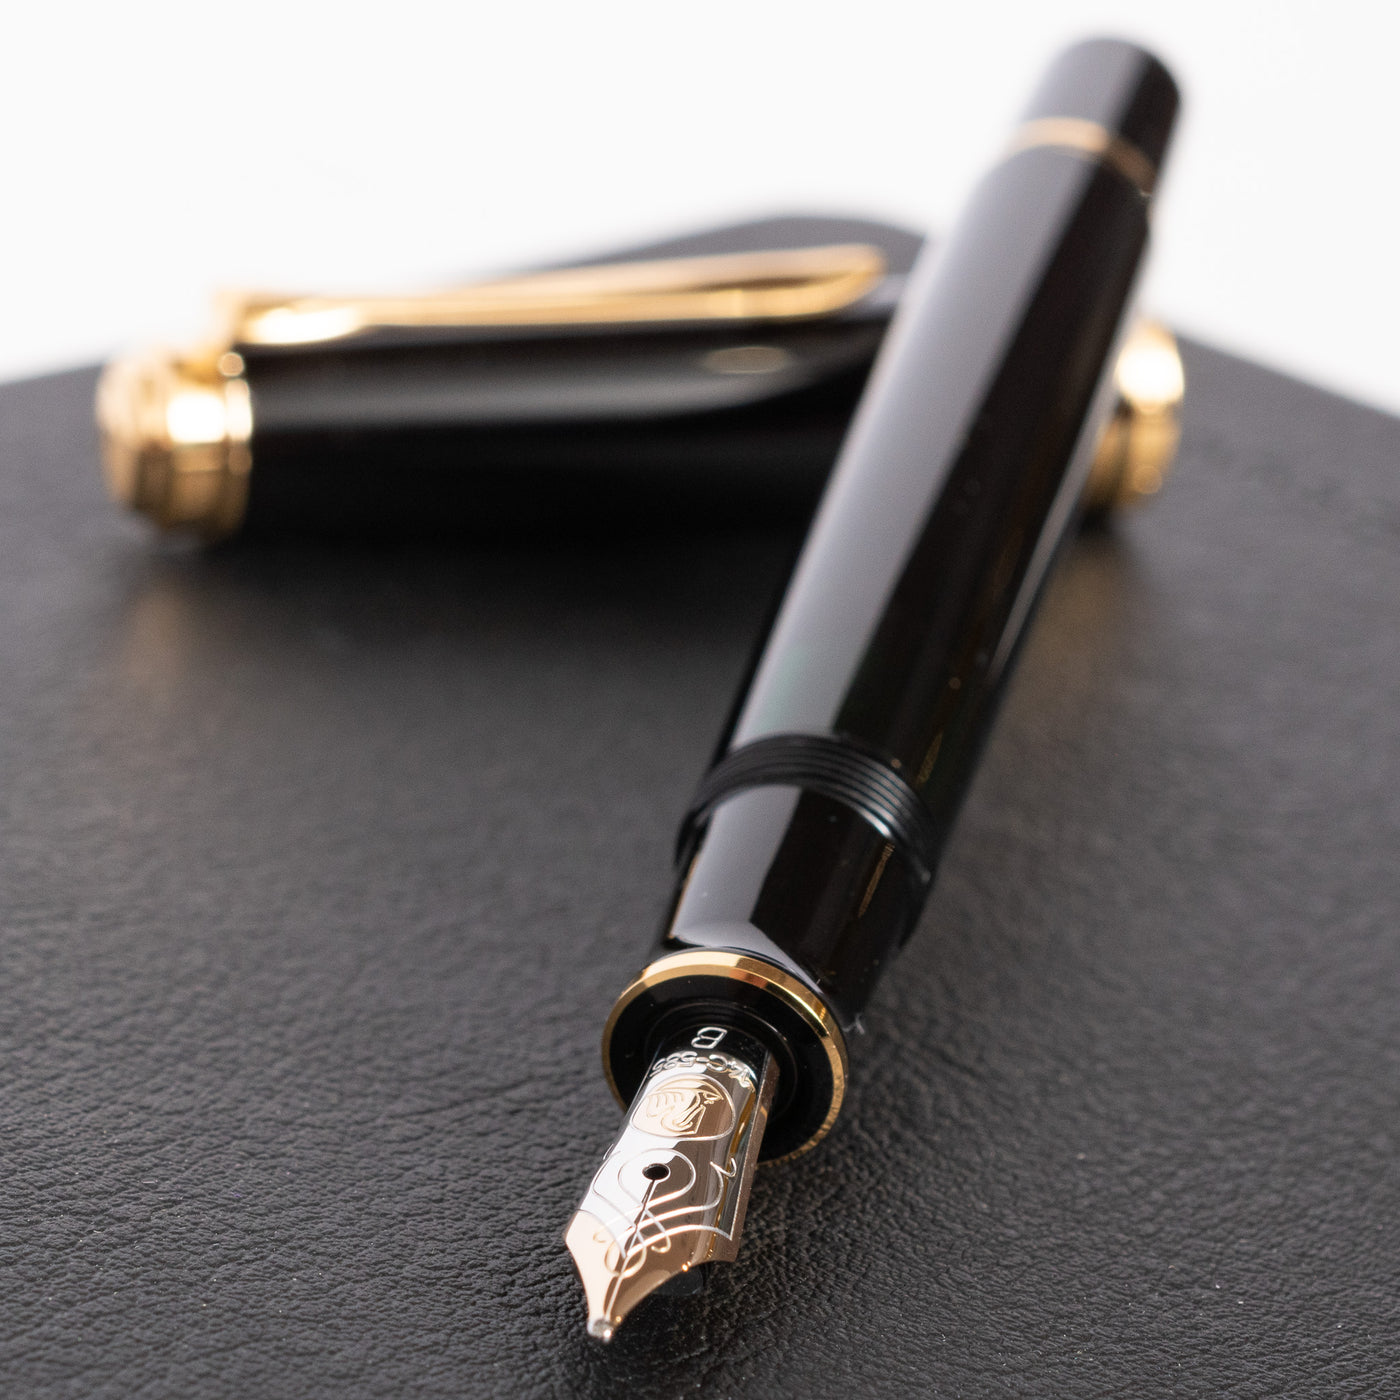 Pelikan Souveran M600 Black Fountain Pen Uncapped